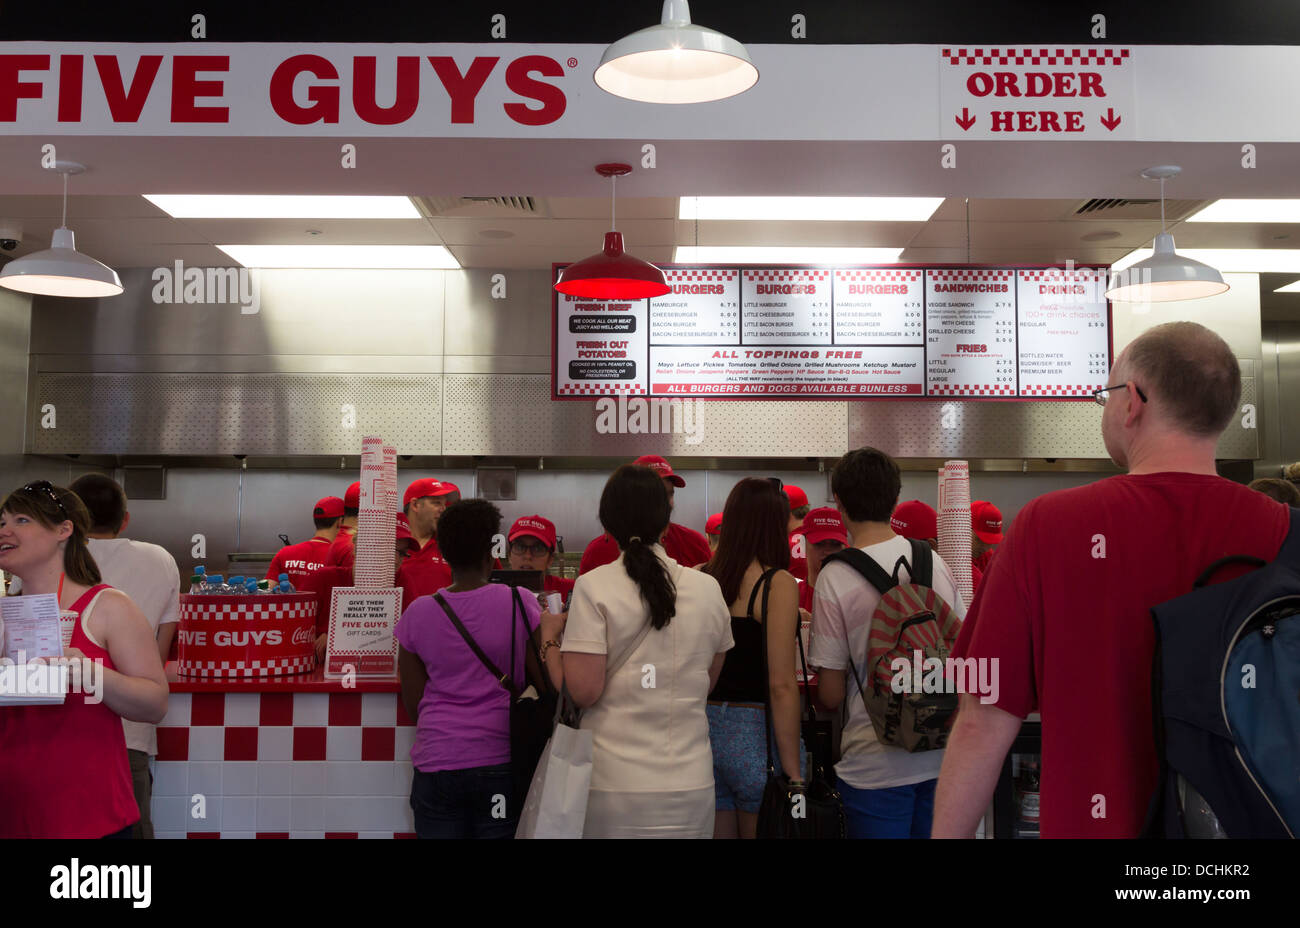 Five Guy's Burger Restaurant - Covent Garden - London Stock Photo